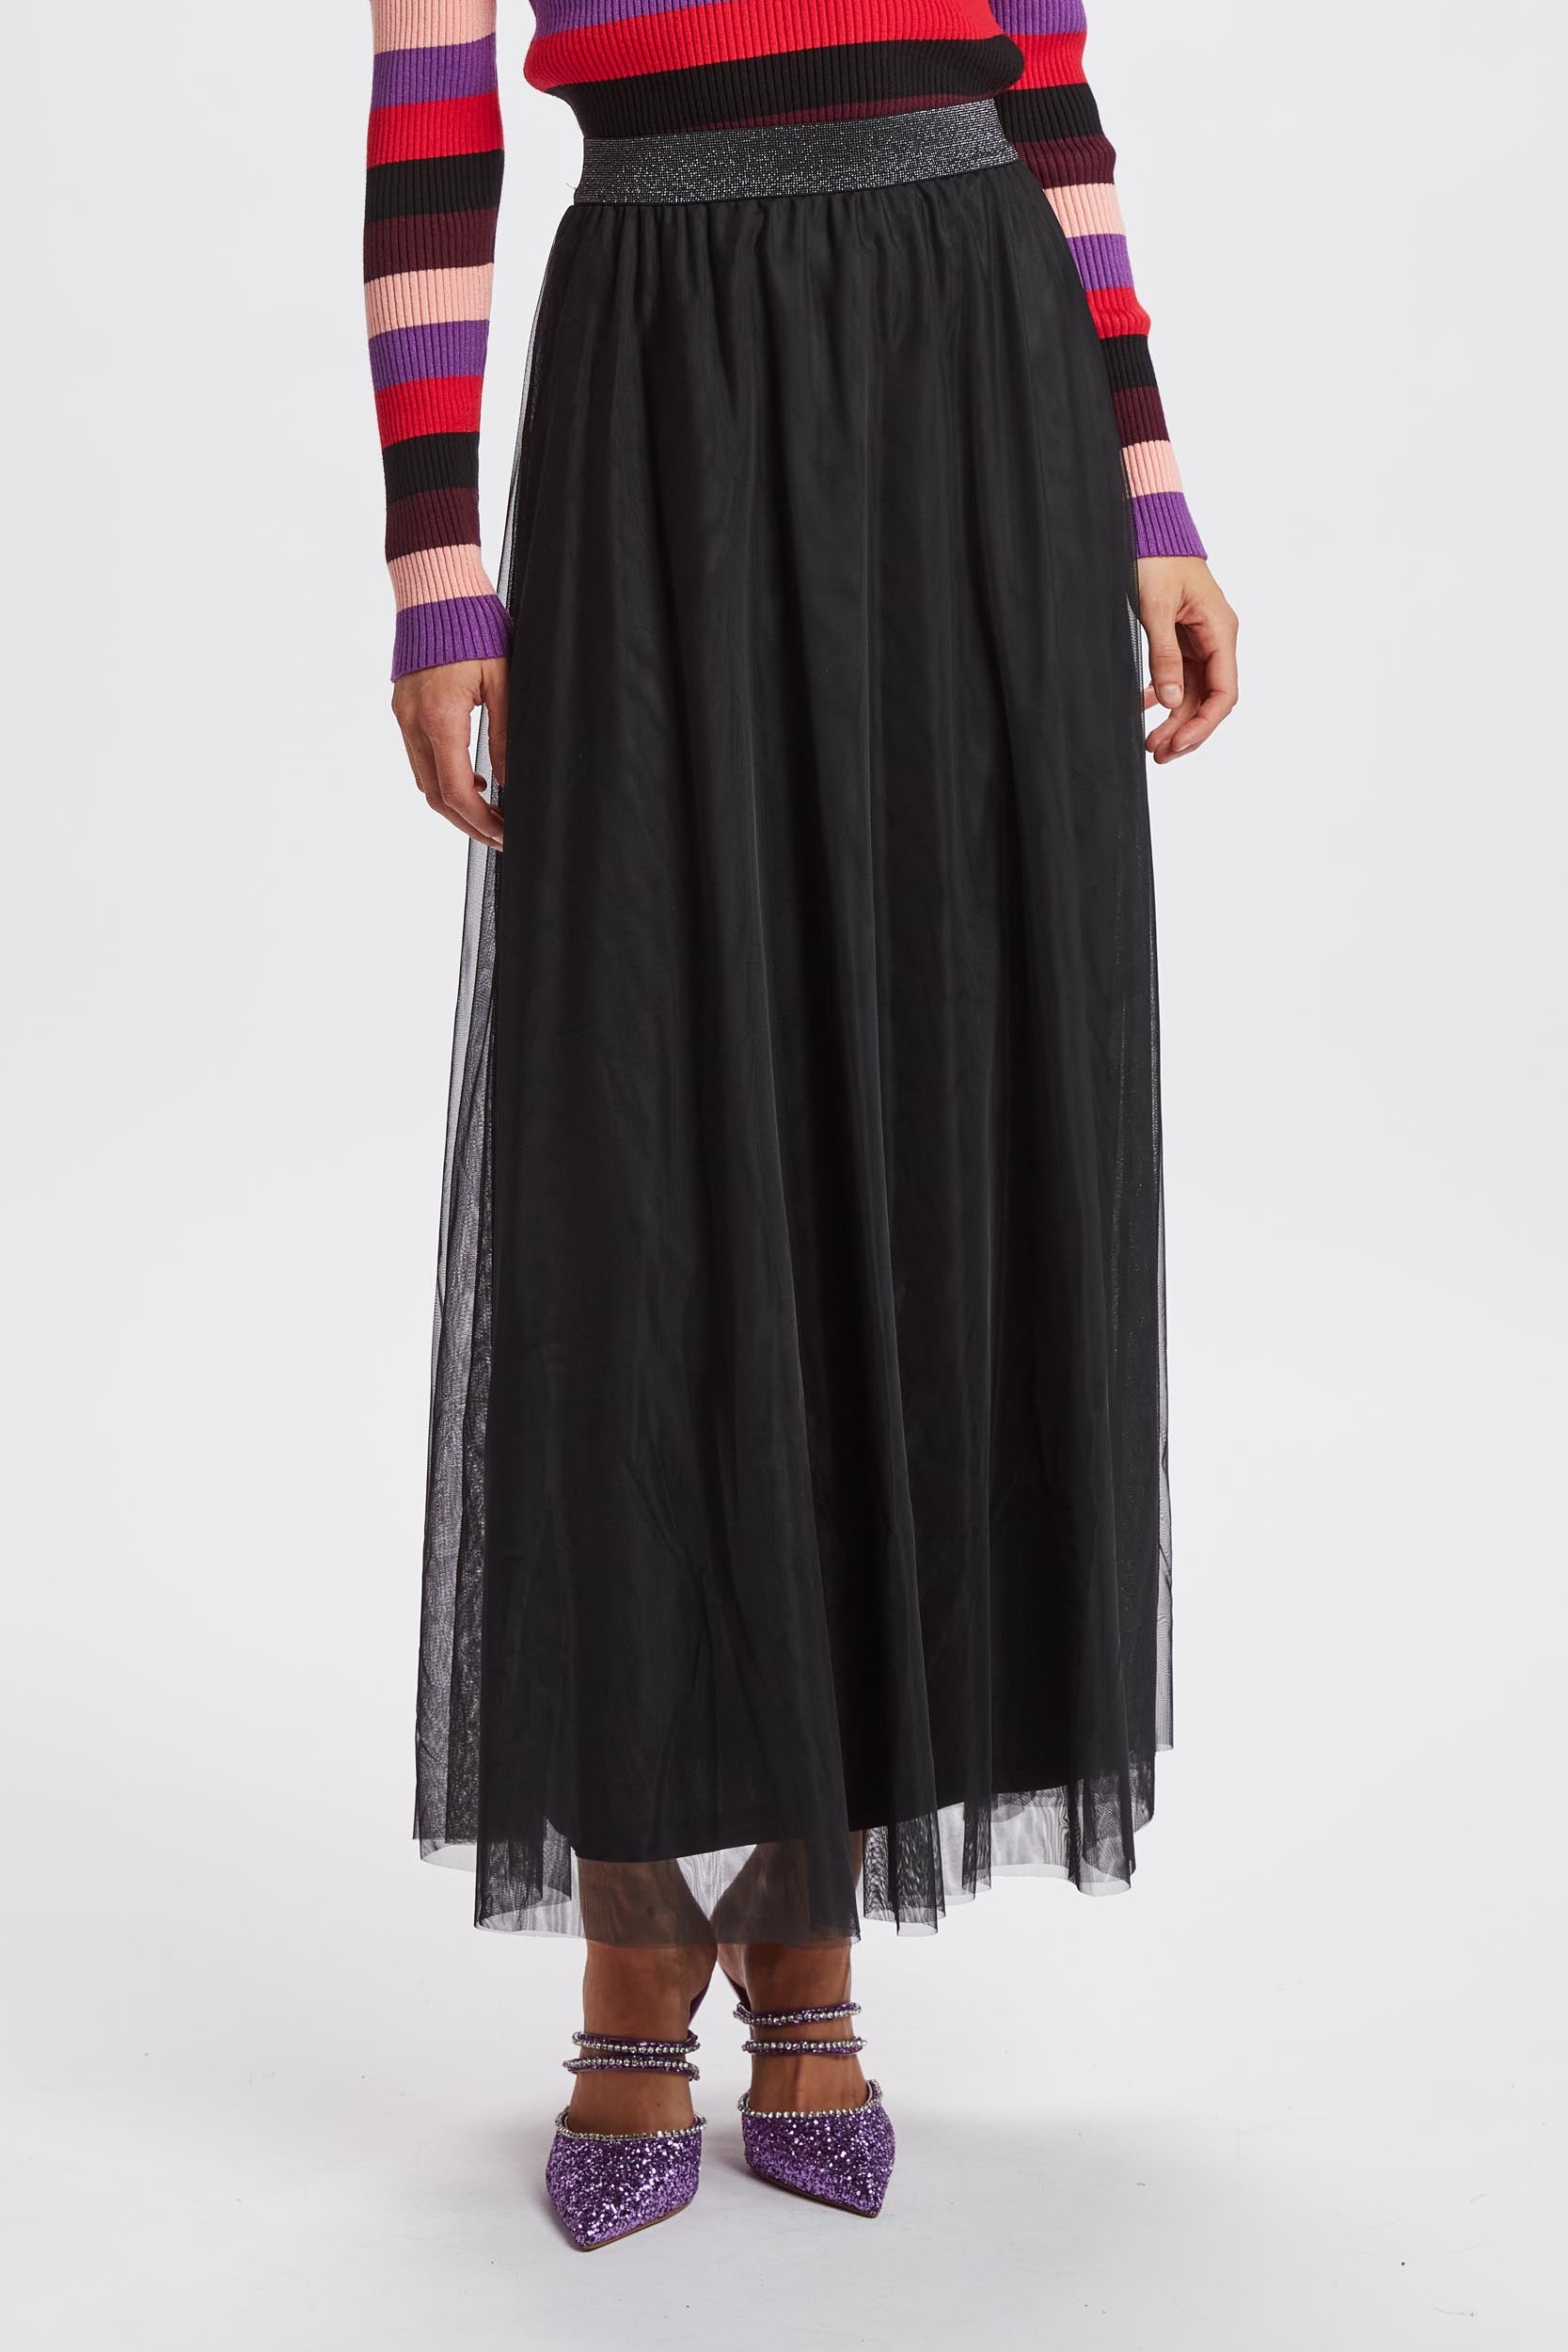 Nümph Nuea Maxi Skirt, Black